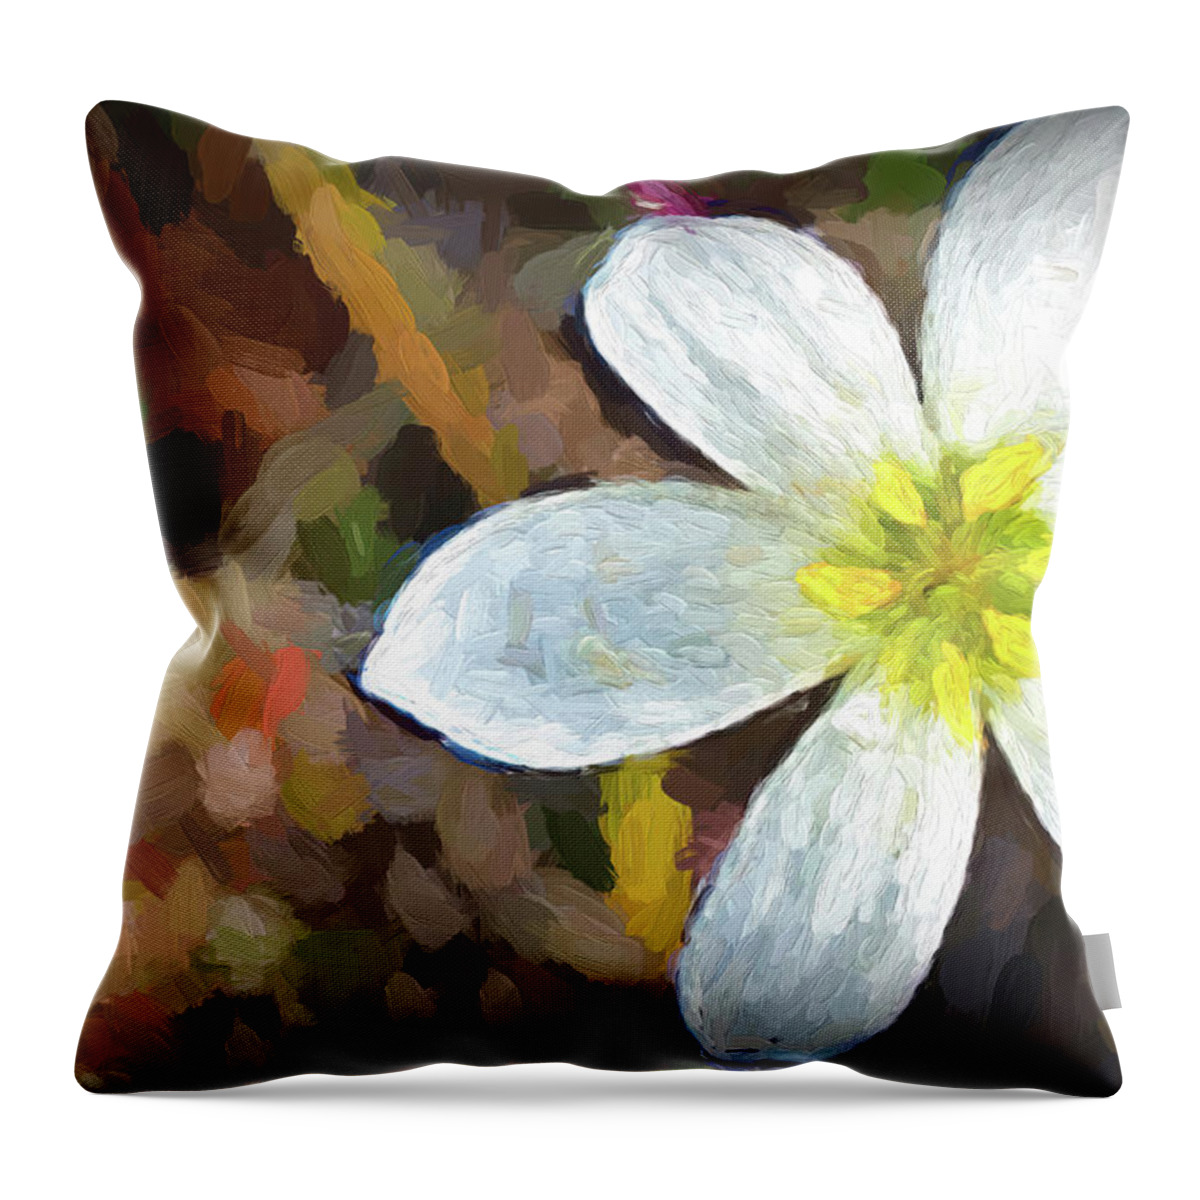 Flower Print Throw Pillow featuring the digital art Beach Flower by Phil Mancuso